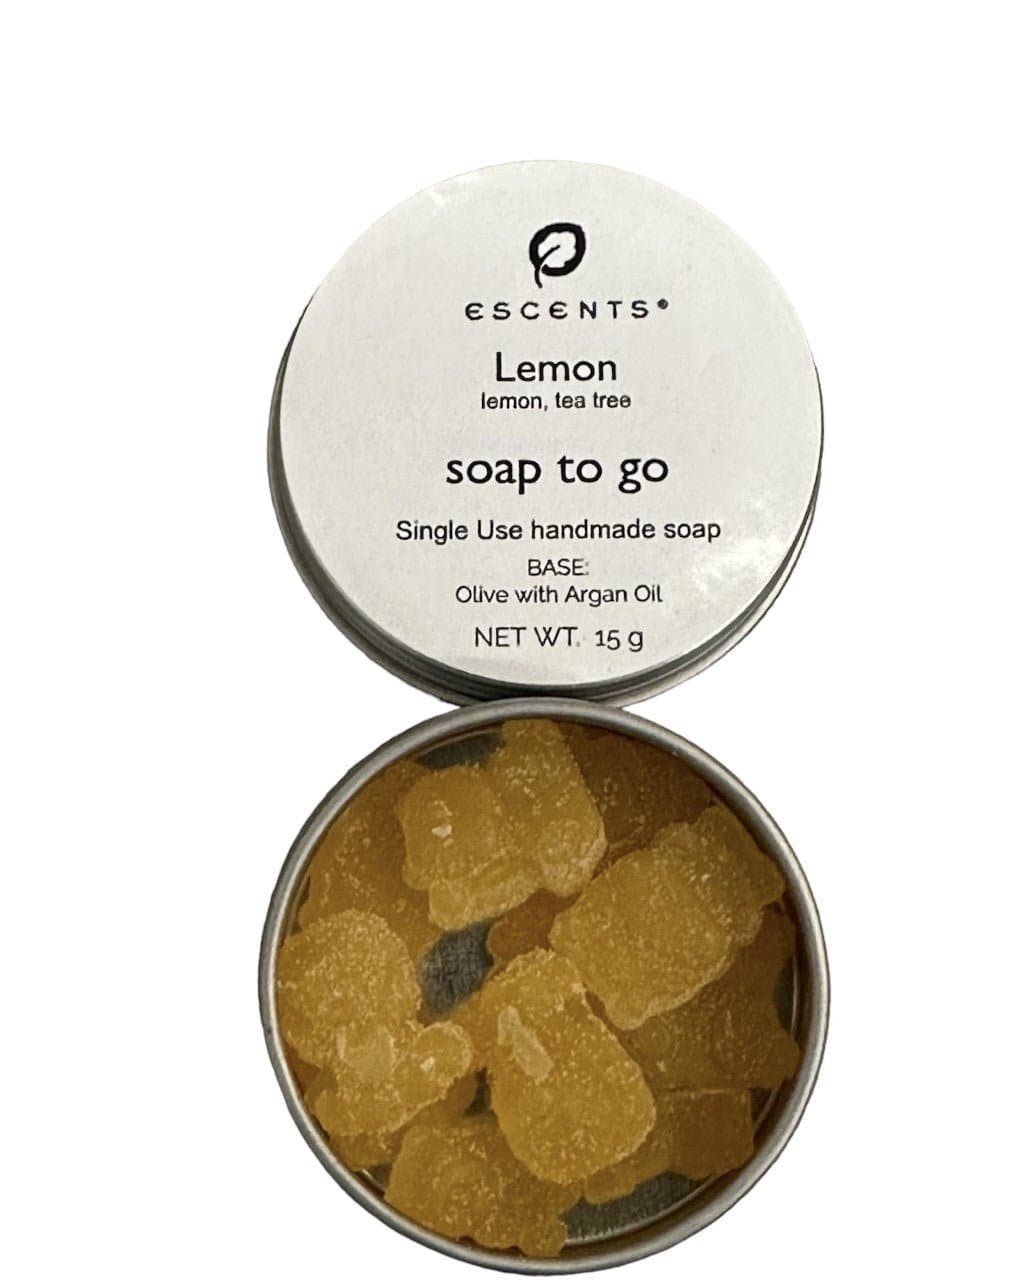 Soap To Go Lemon w/ Tea Tree (Pocket Soap/Single Use Soap) - Premium Bath & Body, Bath & Shower, SOAP from Escents Aromatherapy -  !   